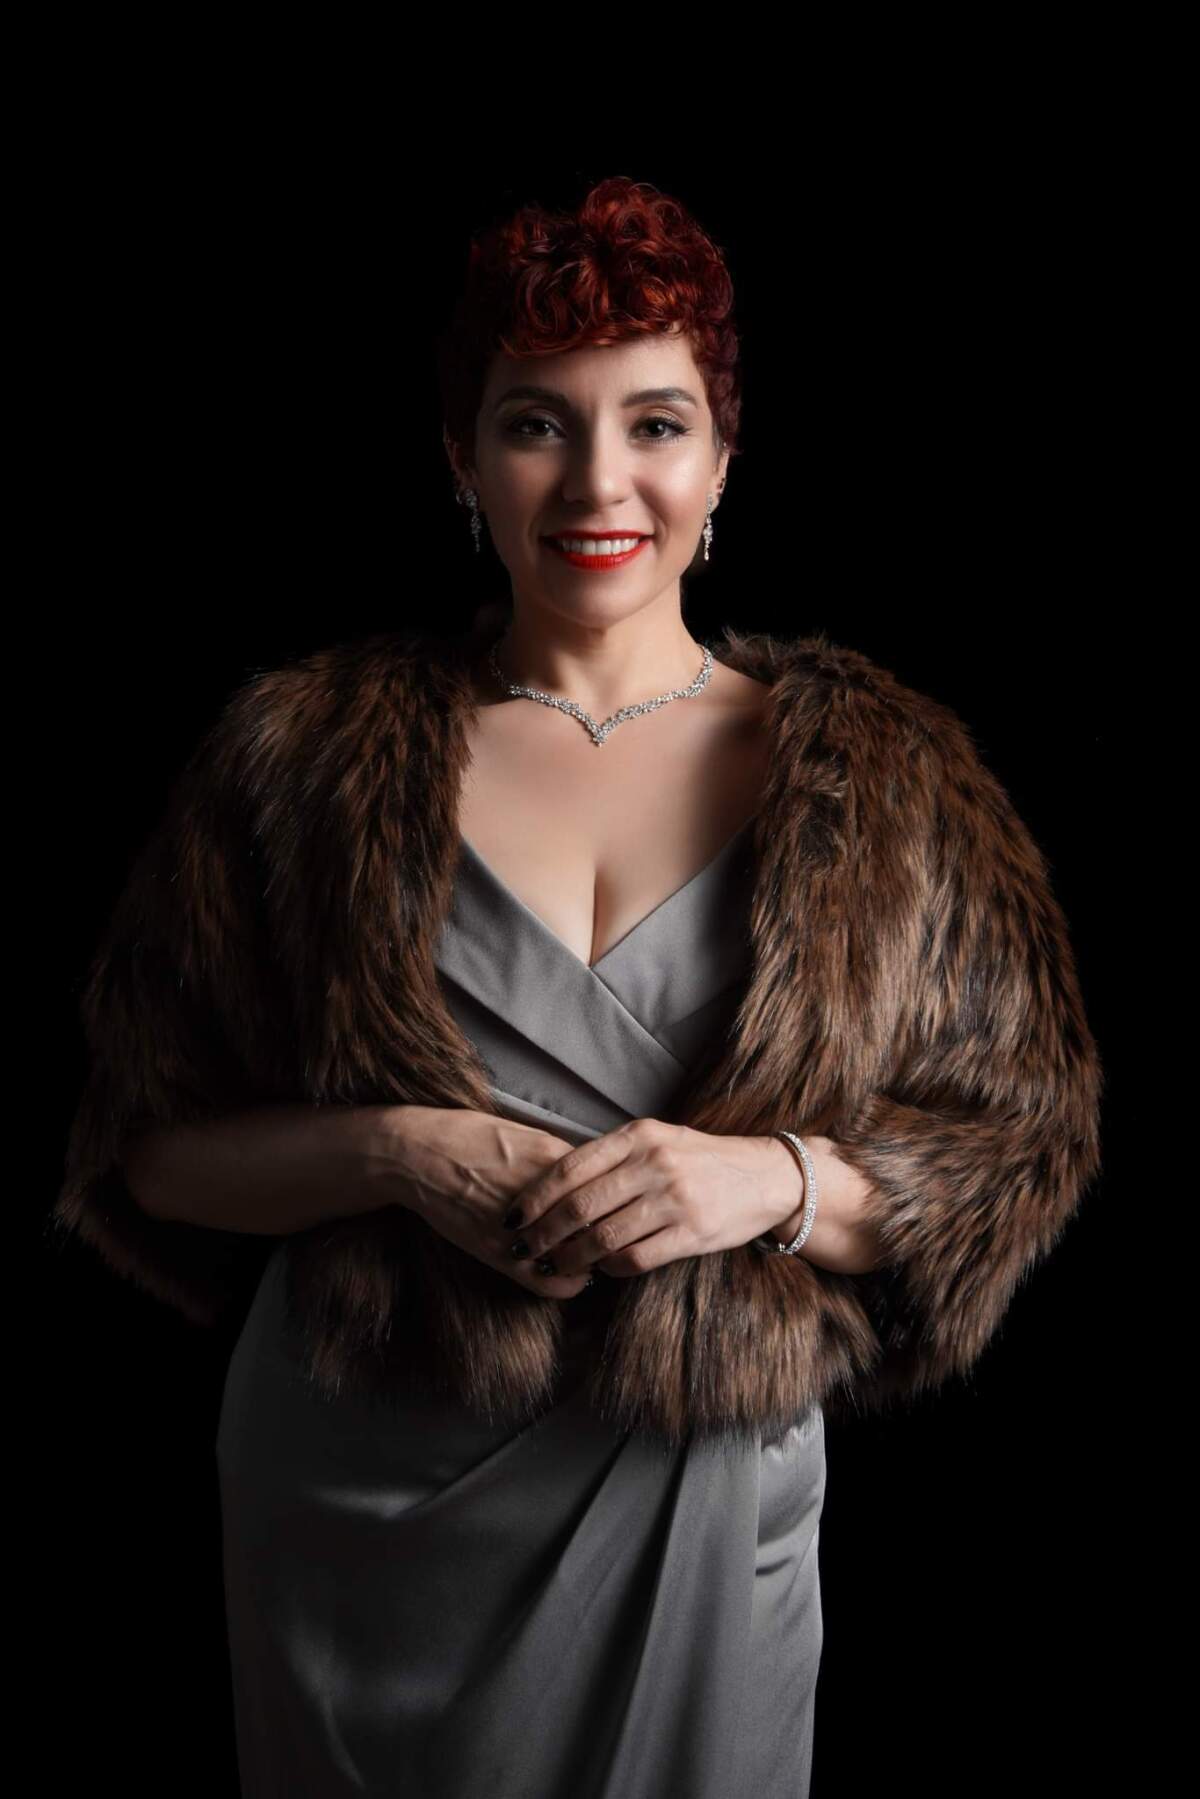 Norma Navarrete will perform as part of La Jolla Community Center's 'Opera Wednesday' on November 9th.